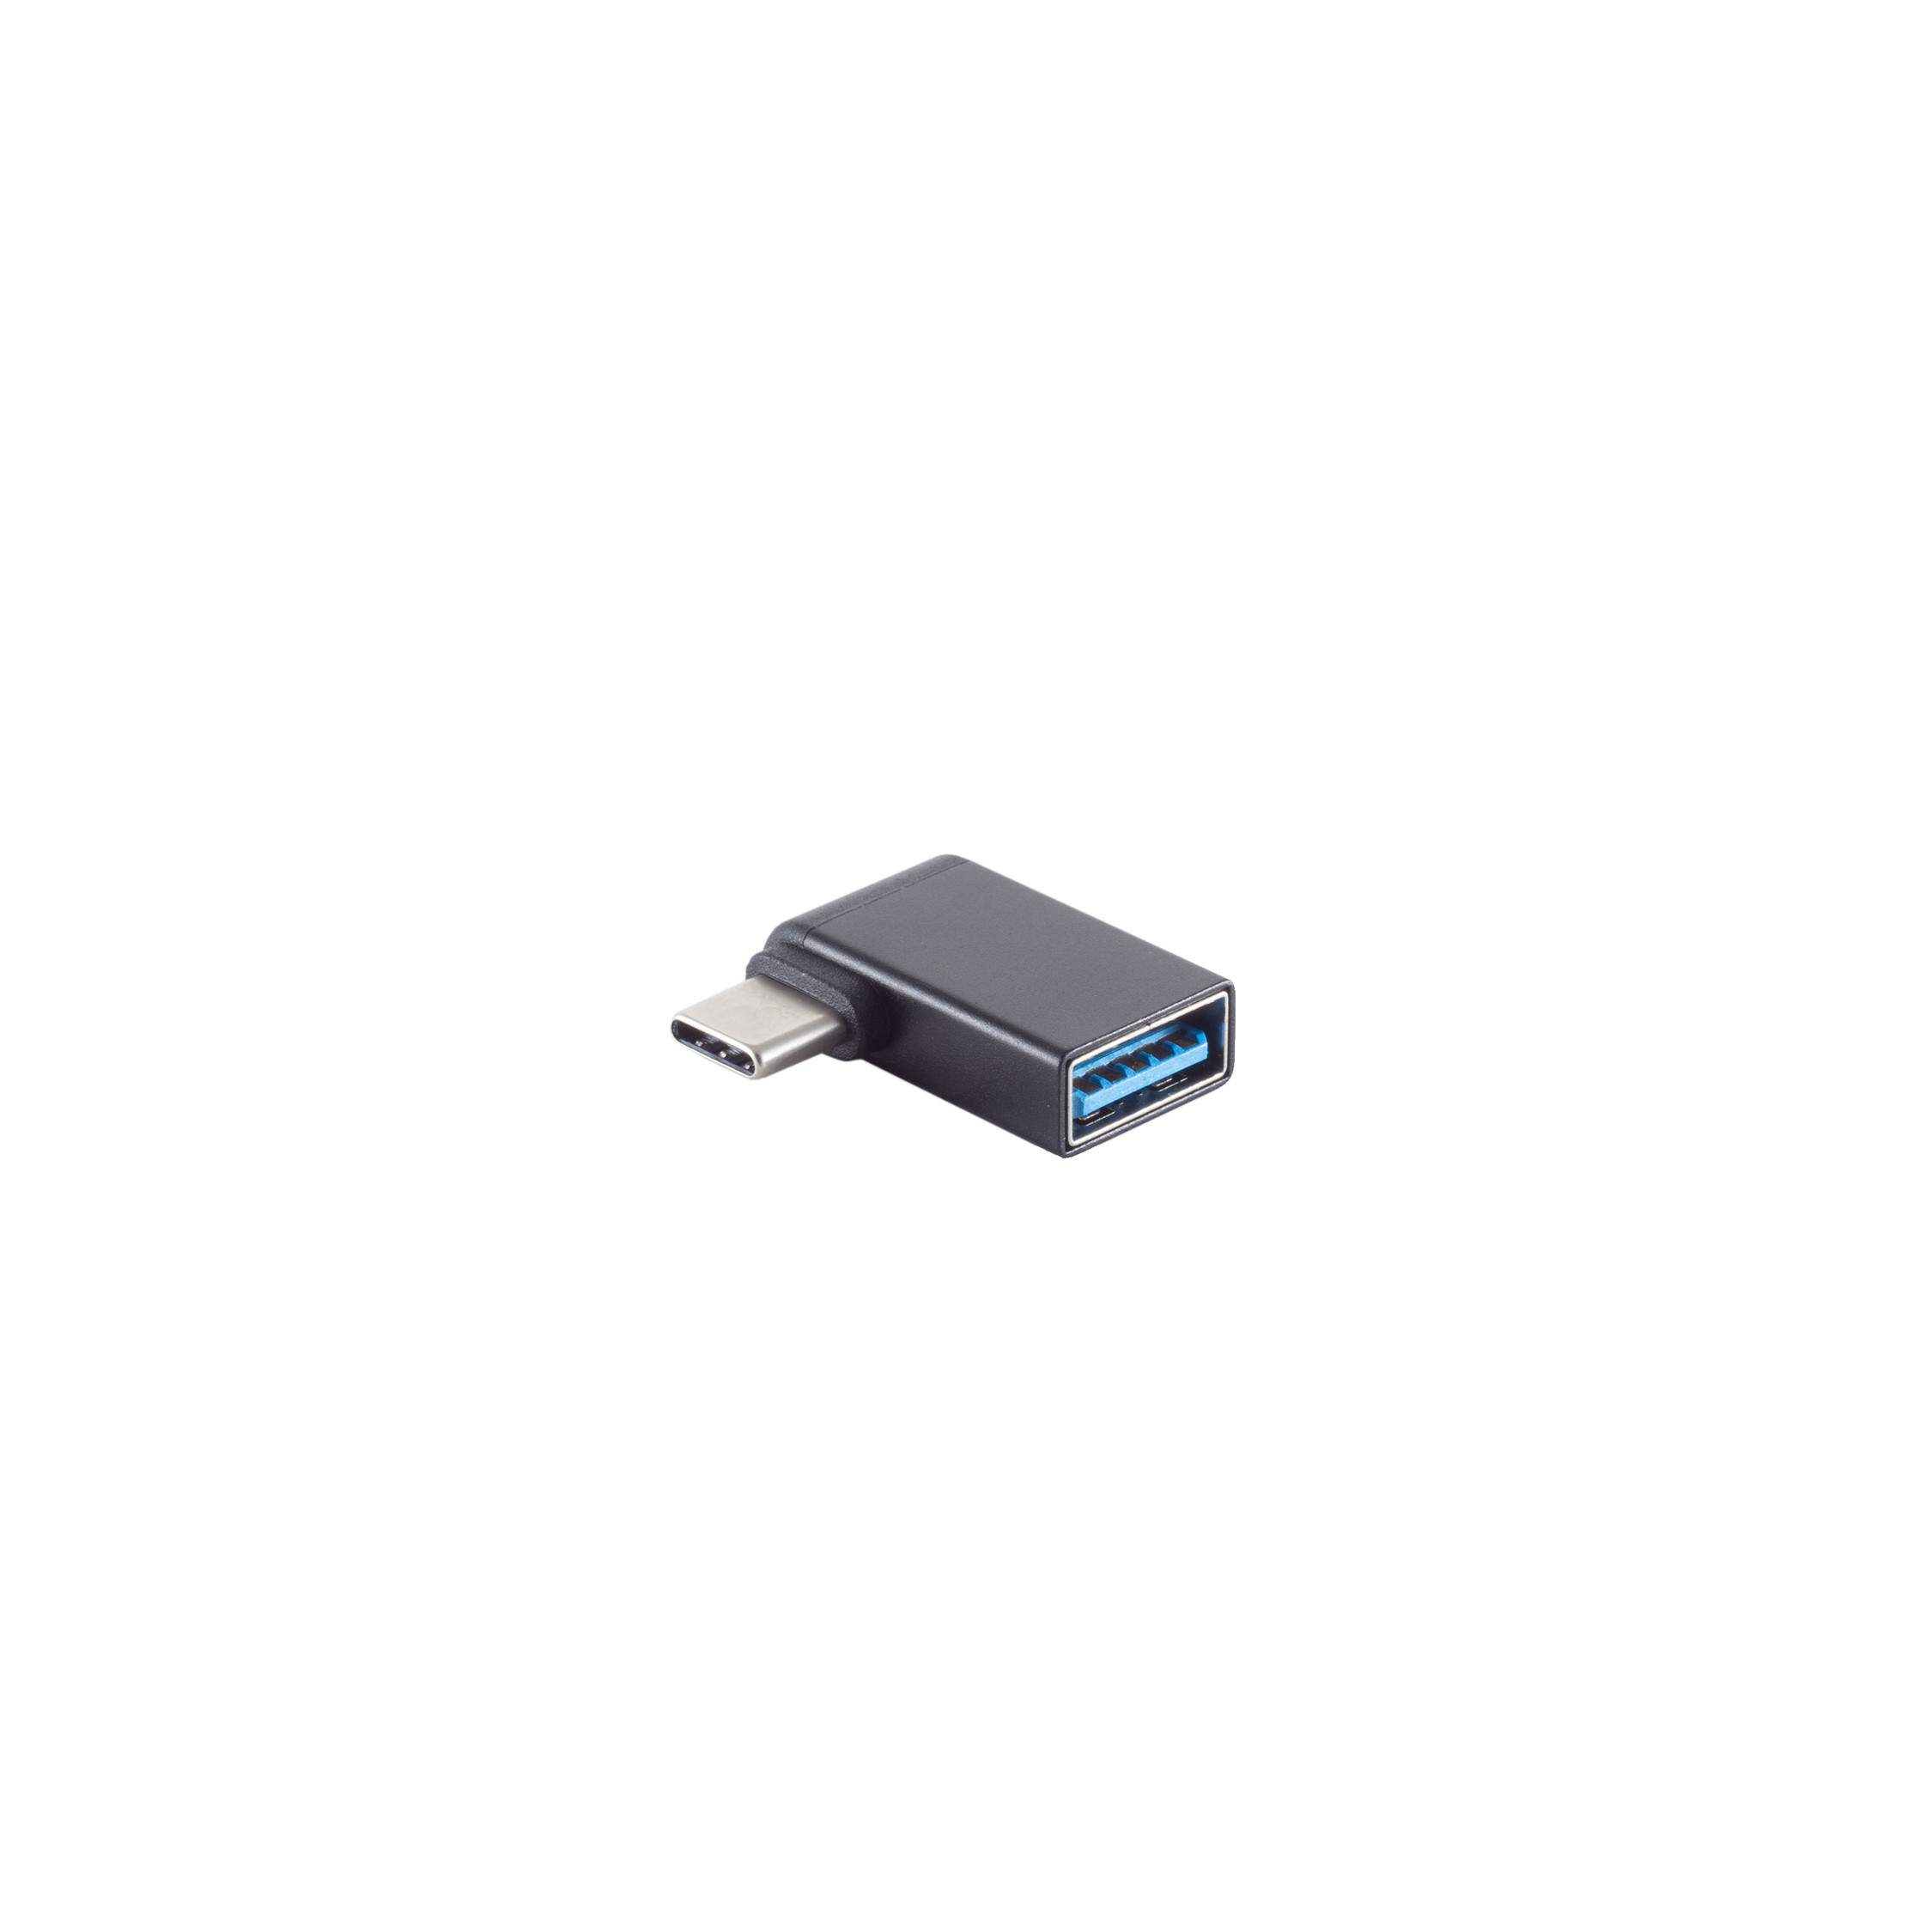 S/CONN MAXIMUM 90° / USB-A USB-C C-Stecker CONNECTIVITY Adapter, Buchse, USB-Typ Adapter 3.0